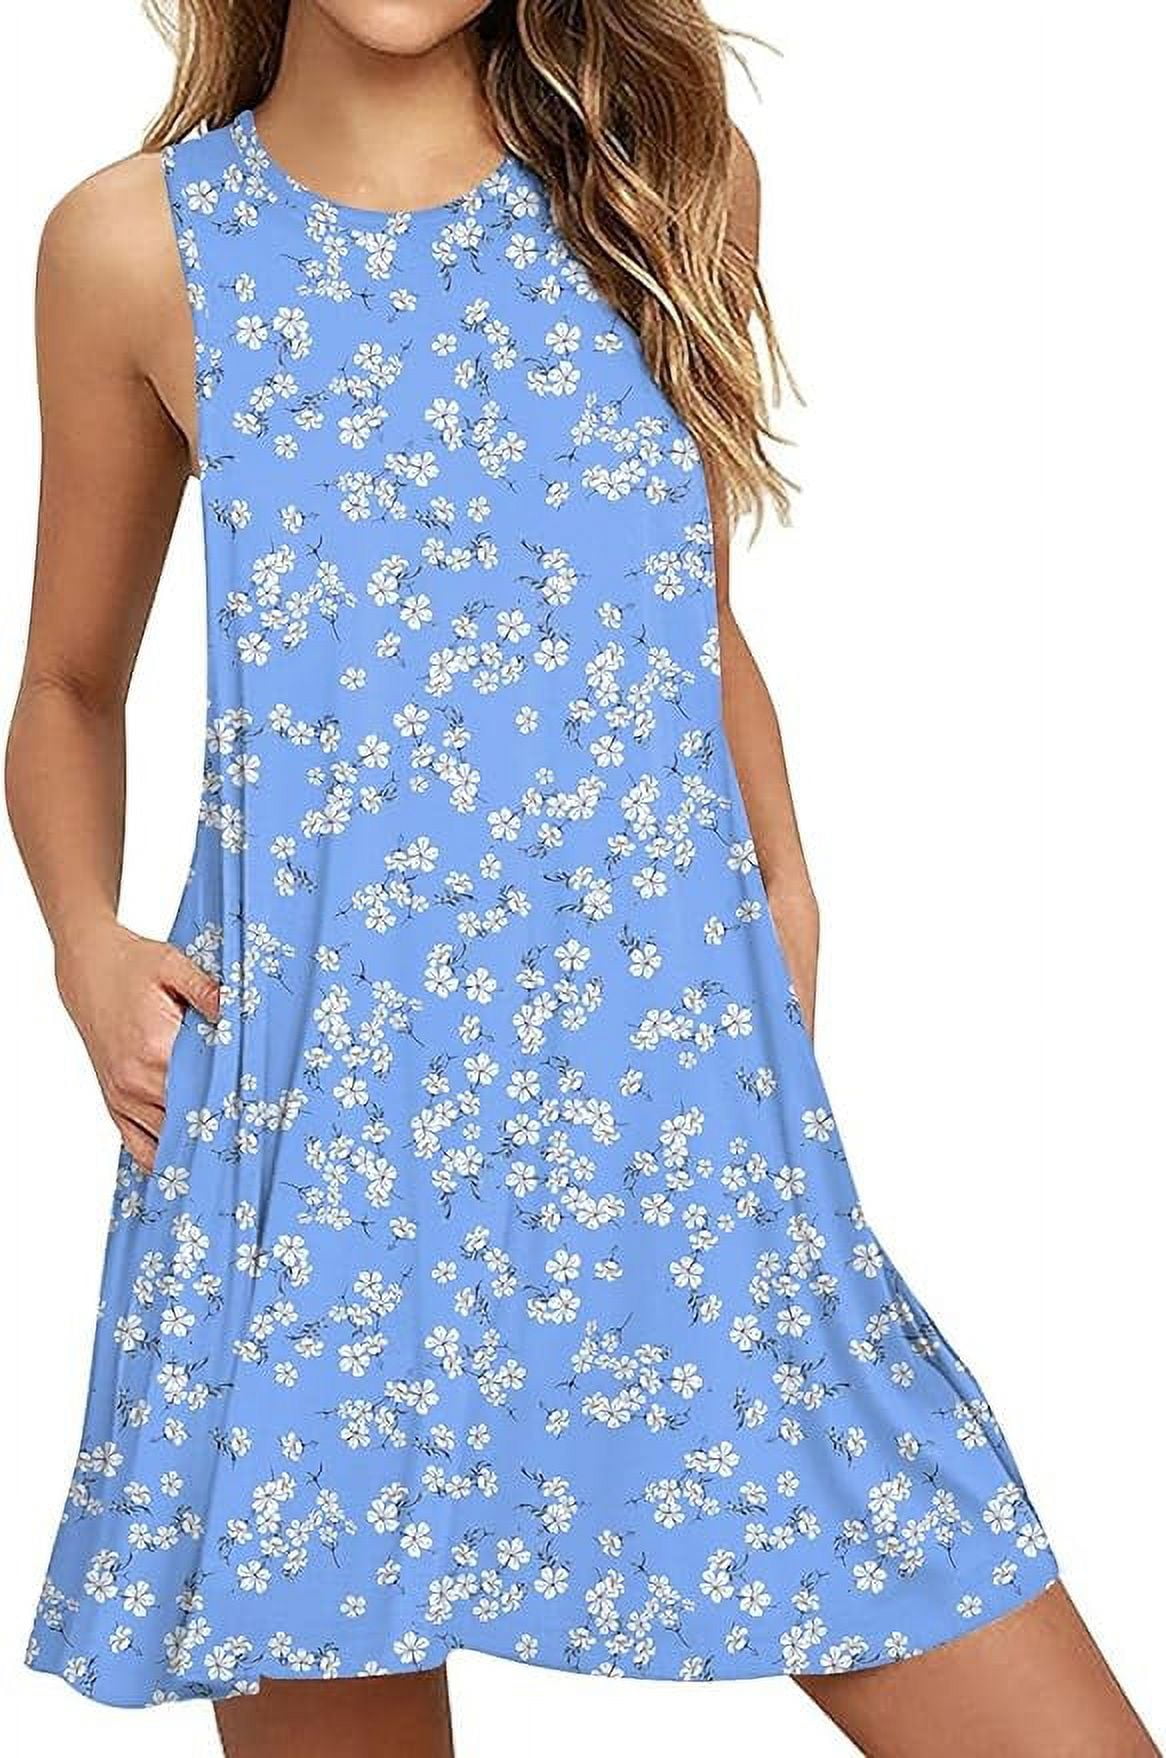 Anyjoin Women's Summer Dresses Beach Floral Tshirt Sundress Sleeveless ...